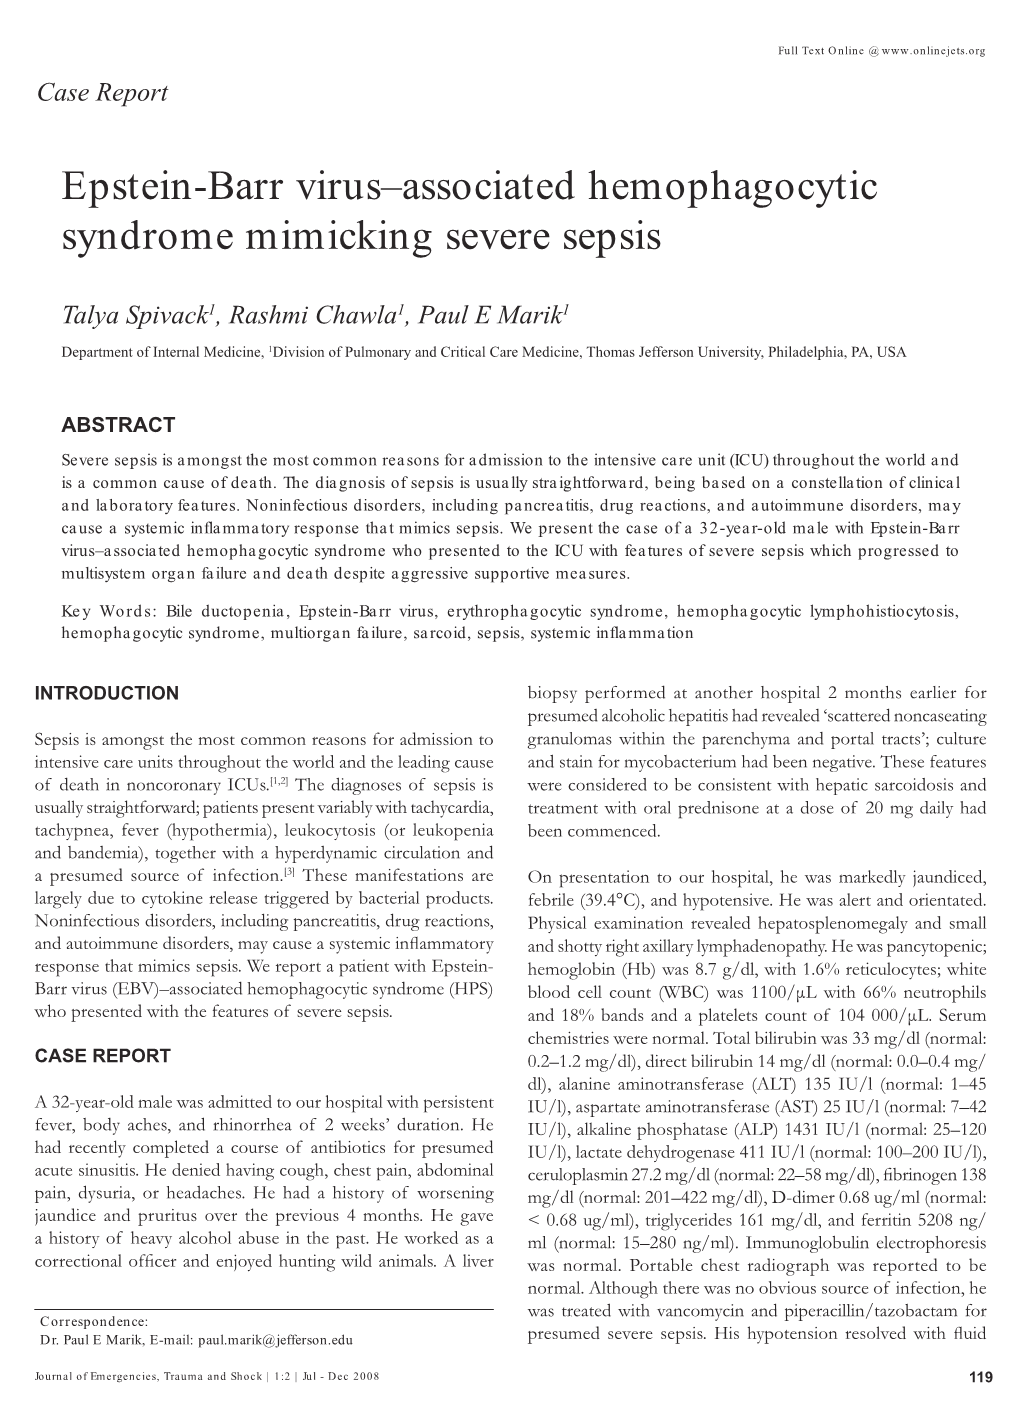 Epstein-Barr Virus–Associated Hemophagocytic Syndrome Mimicking Severe Sepsis